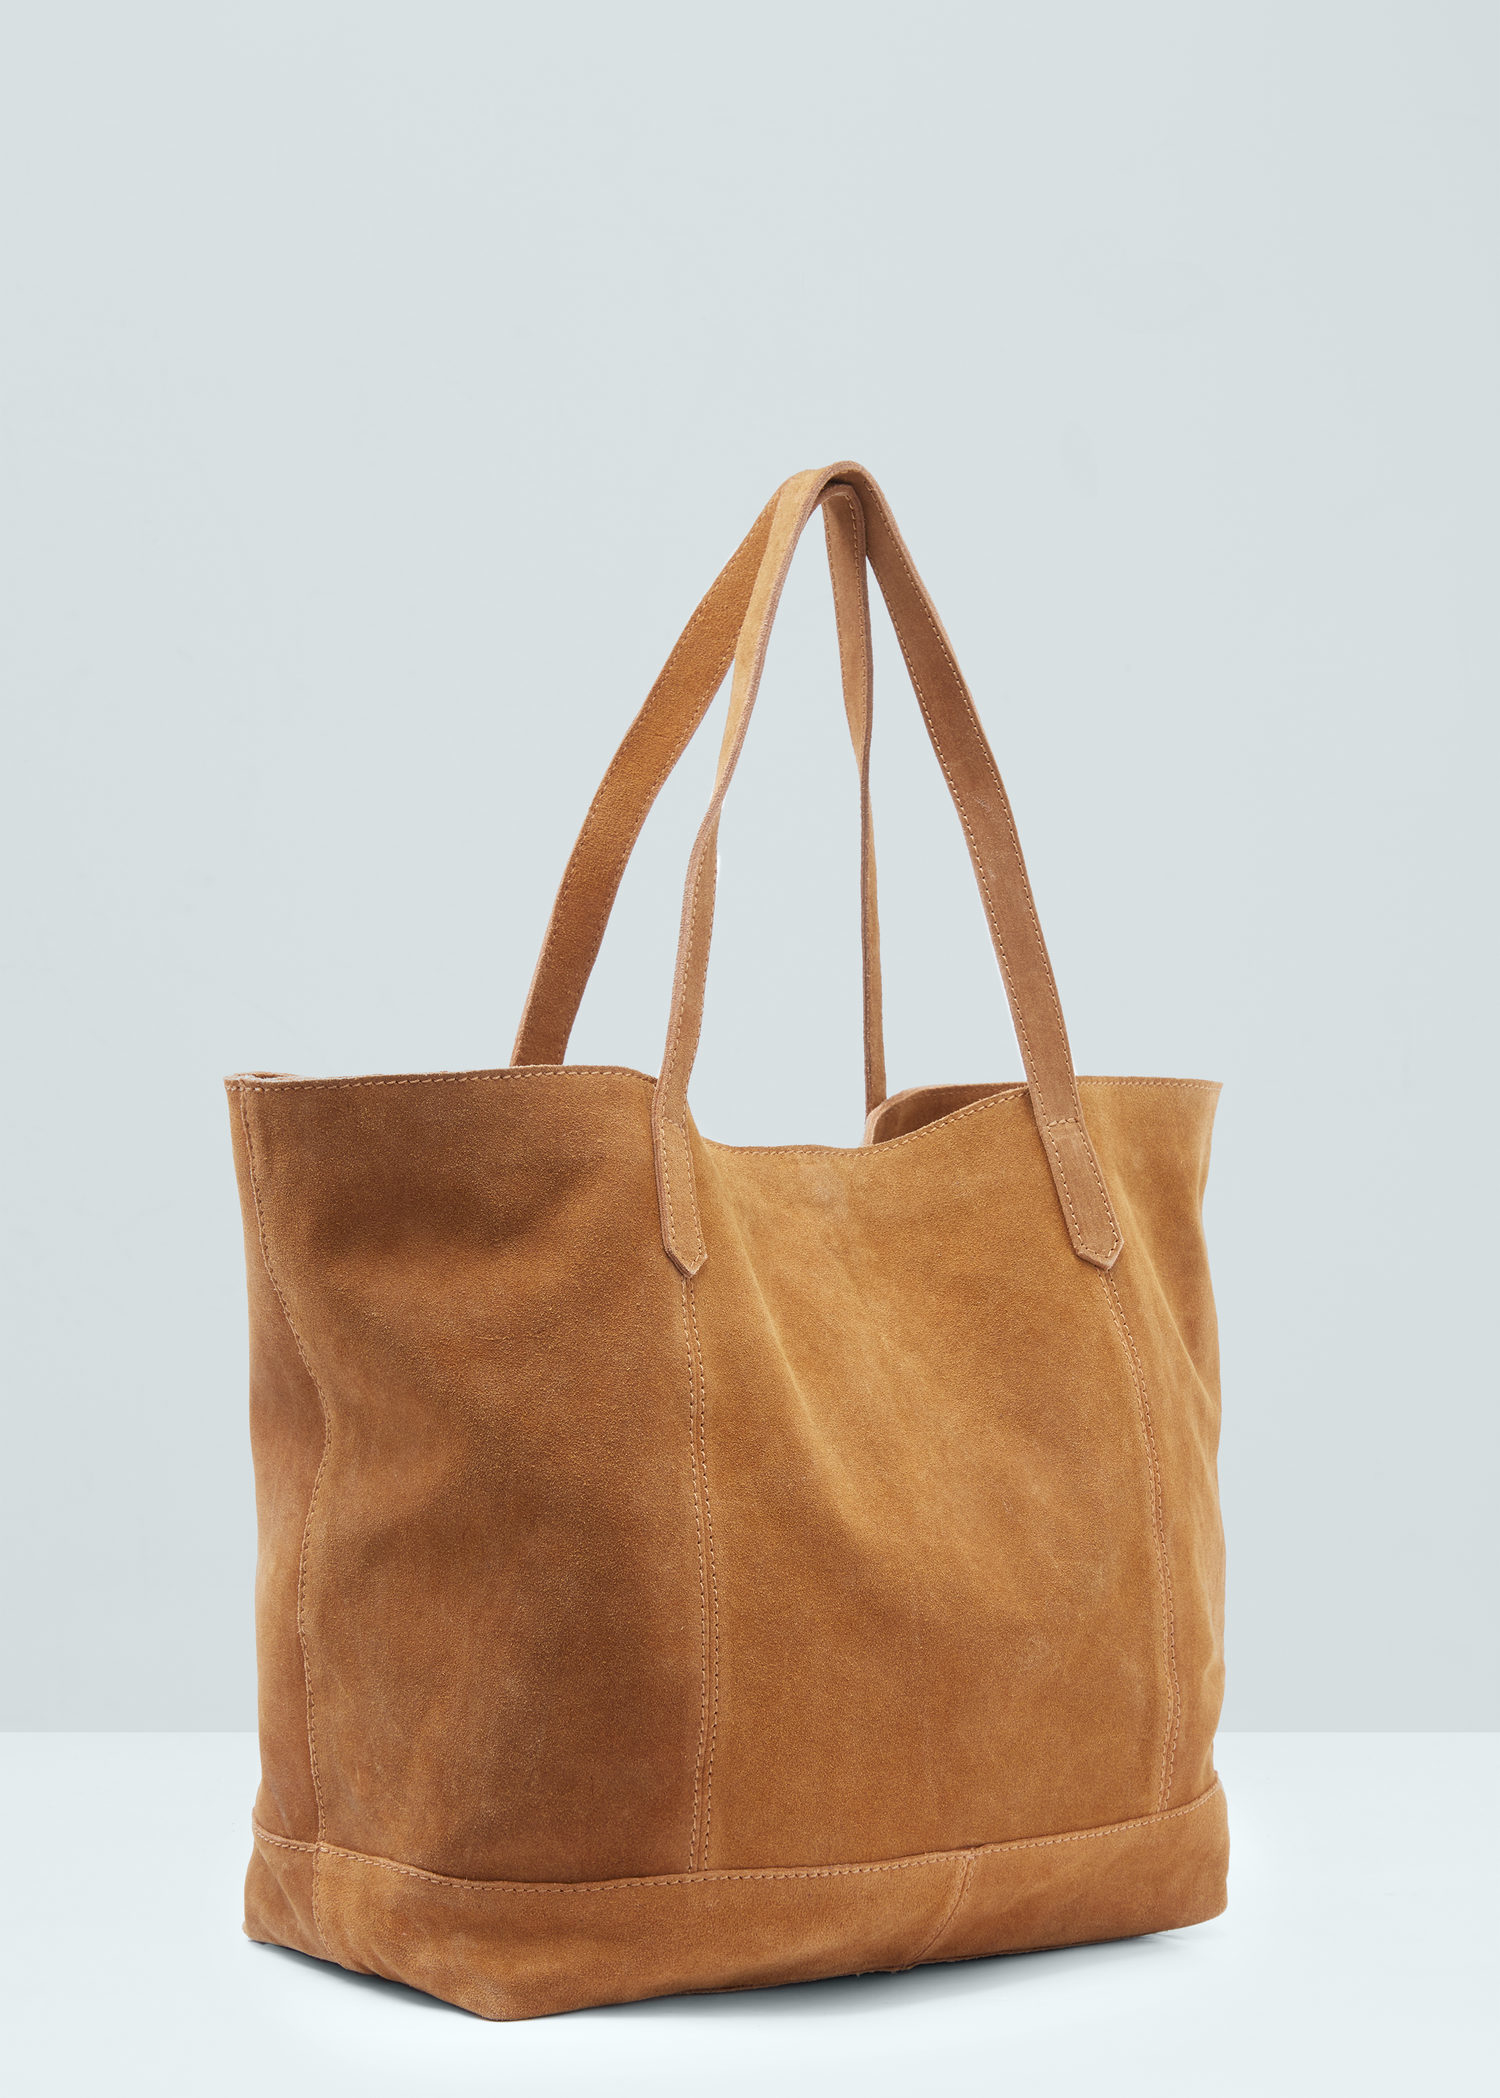 Lyst - Mango Leather Shopper Bag in Brown